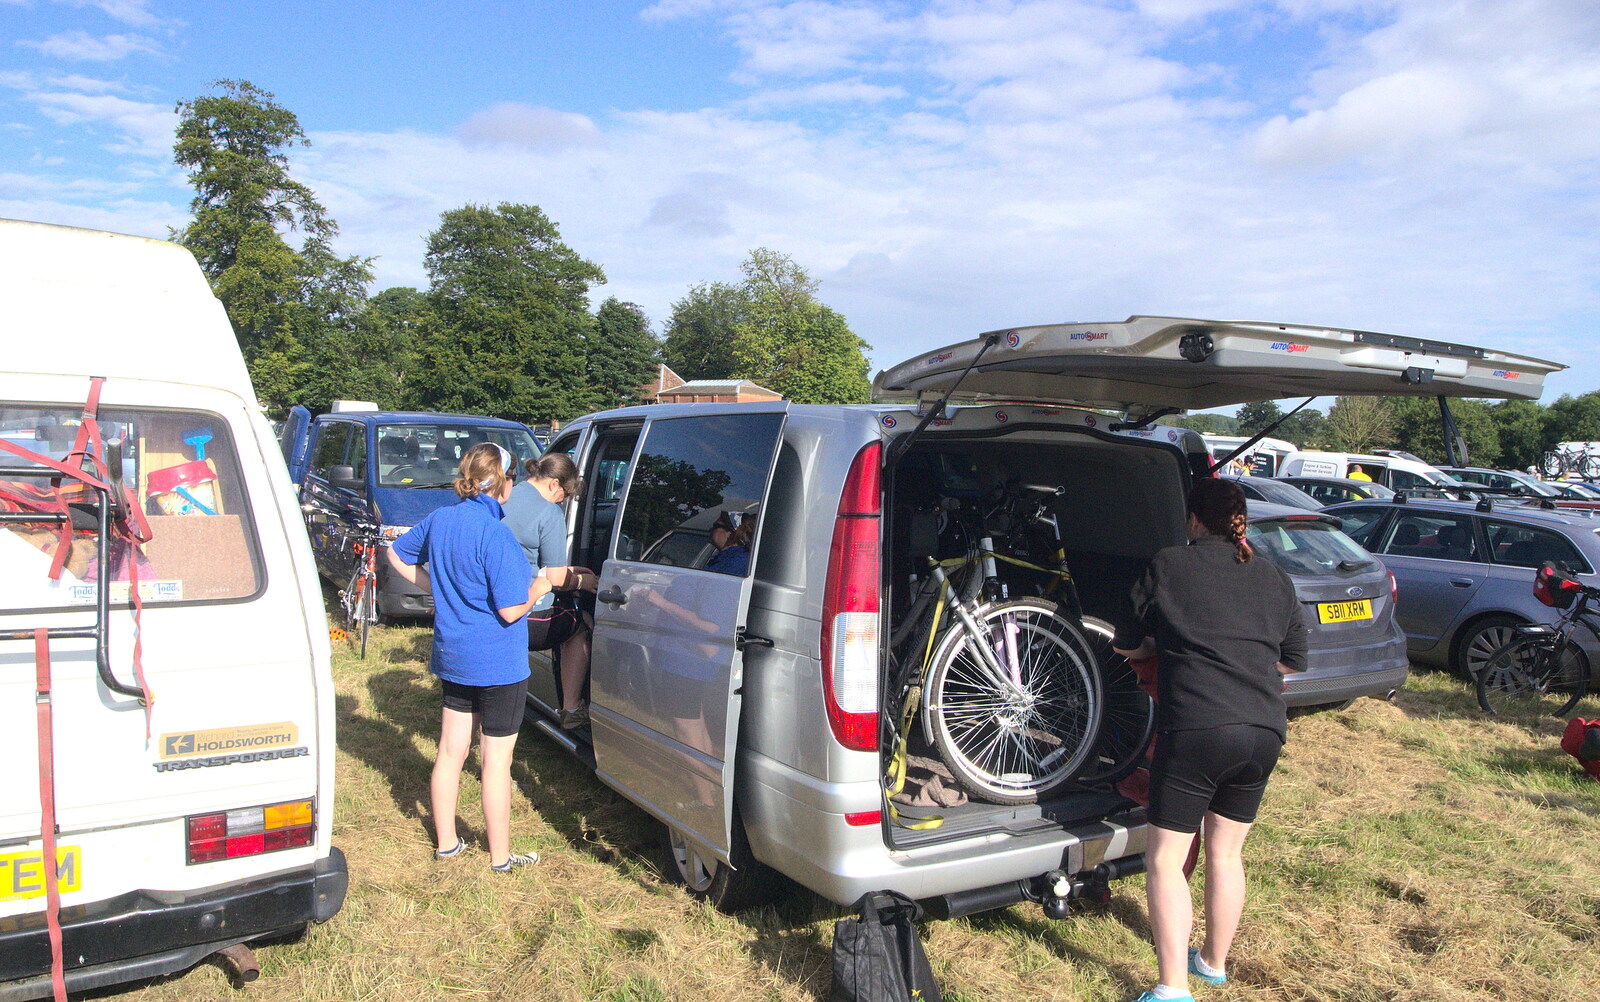 Kirstie's van is unloaded from The RSPB Charity Bike Ride, Little Glemham, Suffolk - 5th August 2012